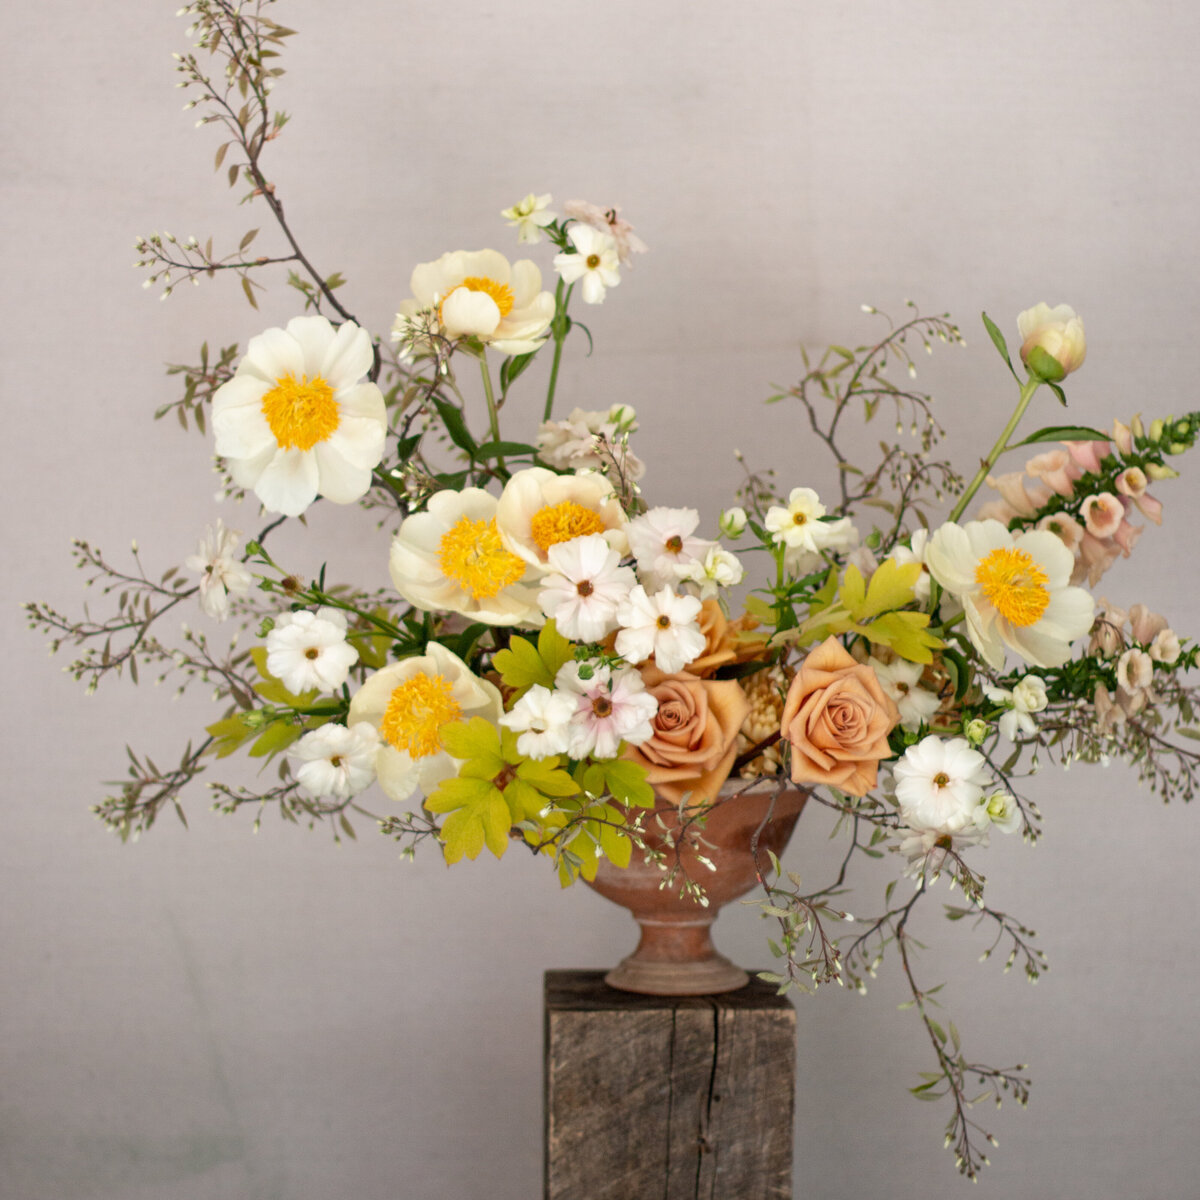 Atelier-Carmel-Wedding-Florist-GALLERY-Arrangements-39